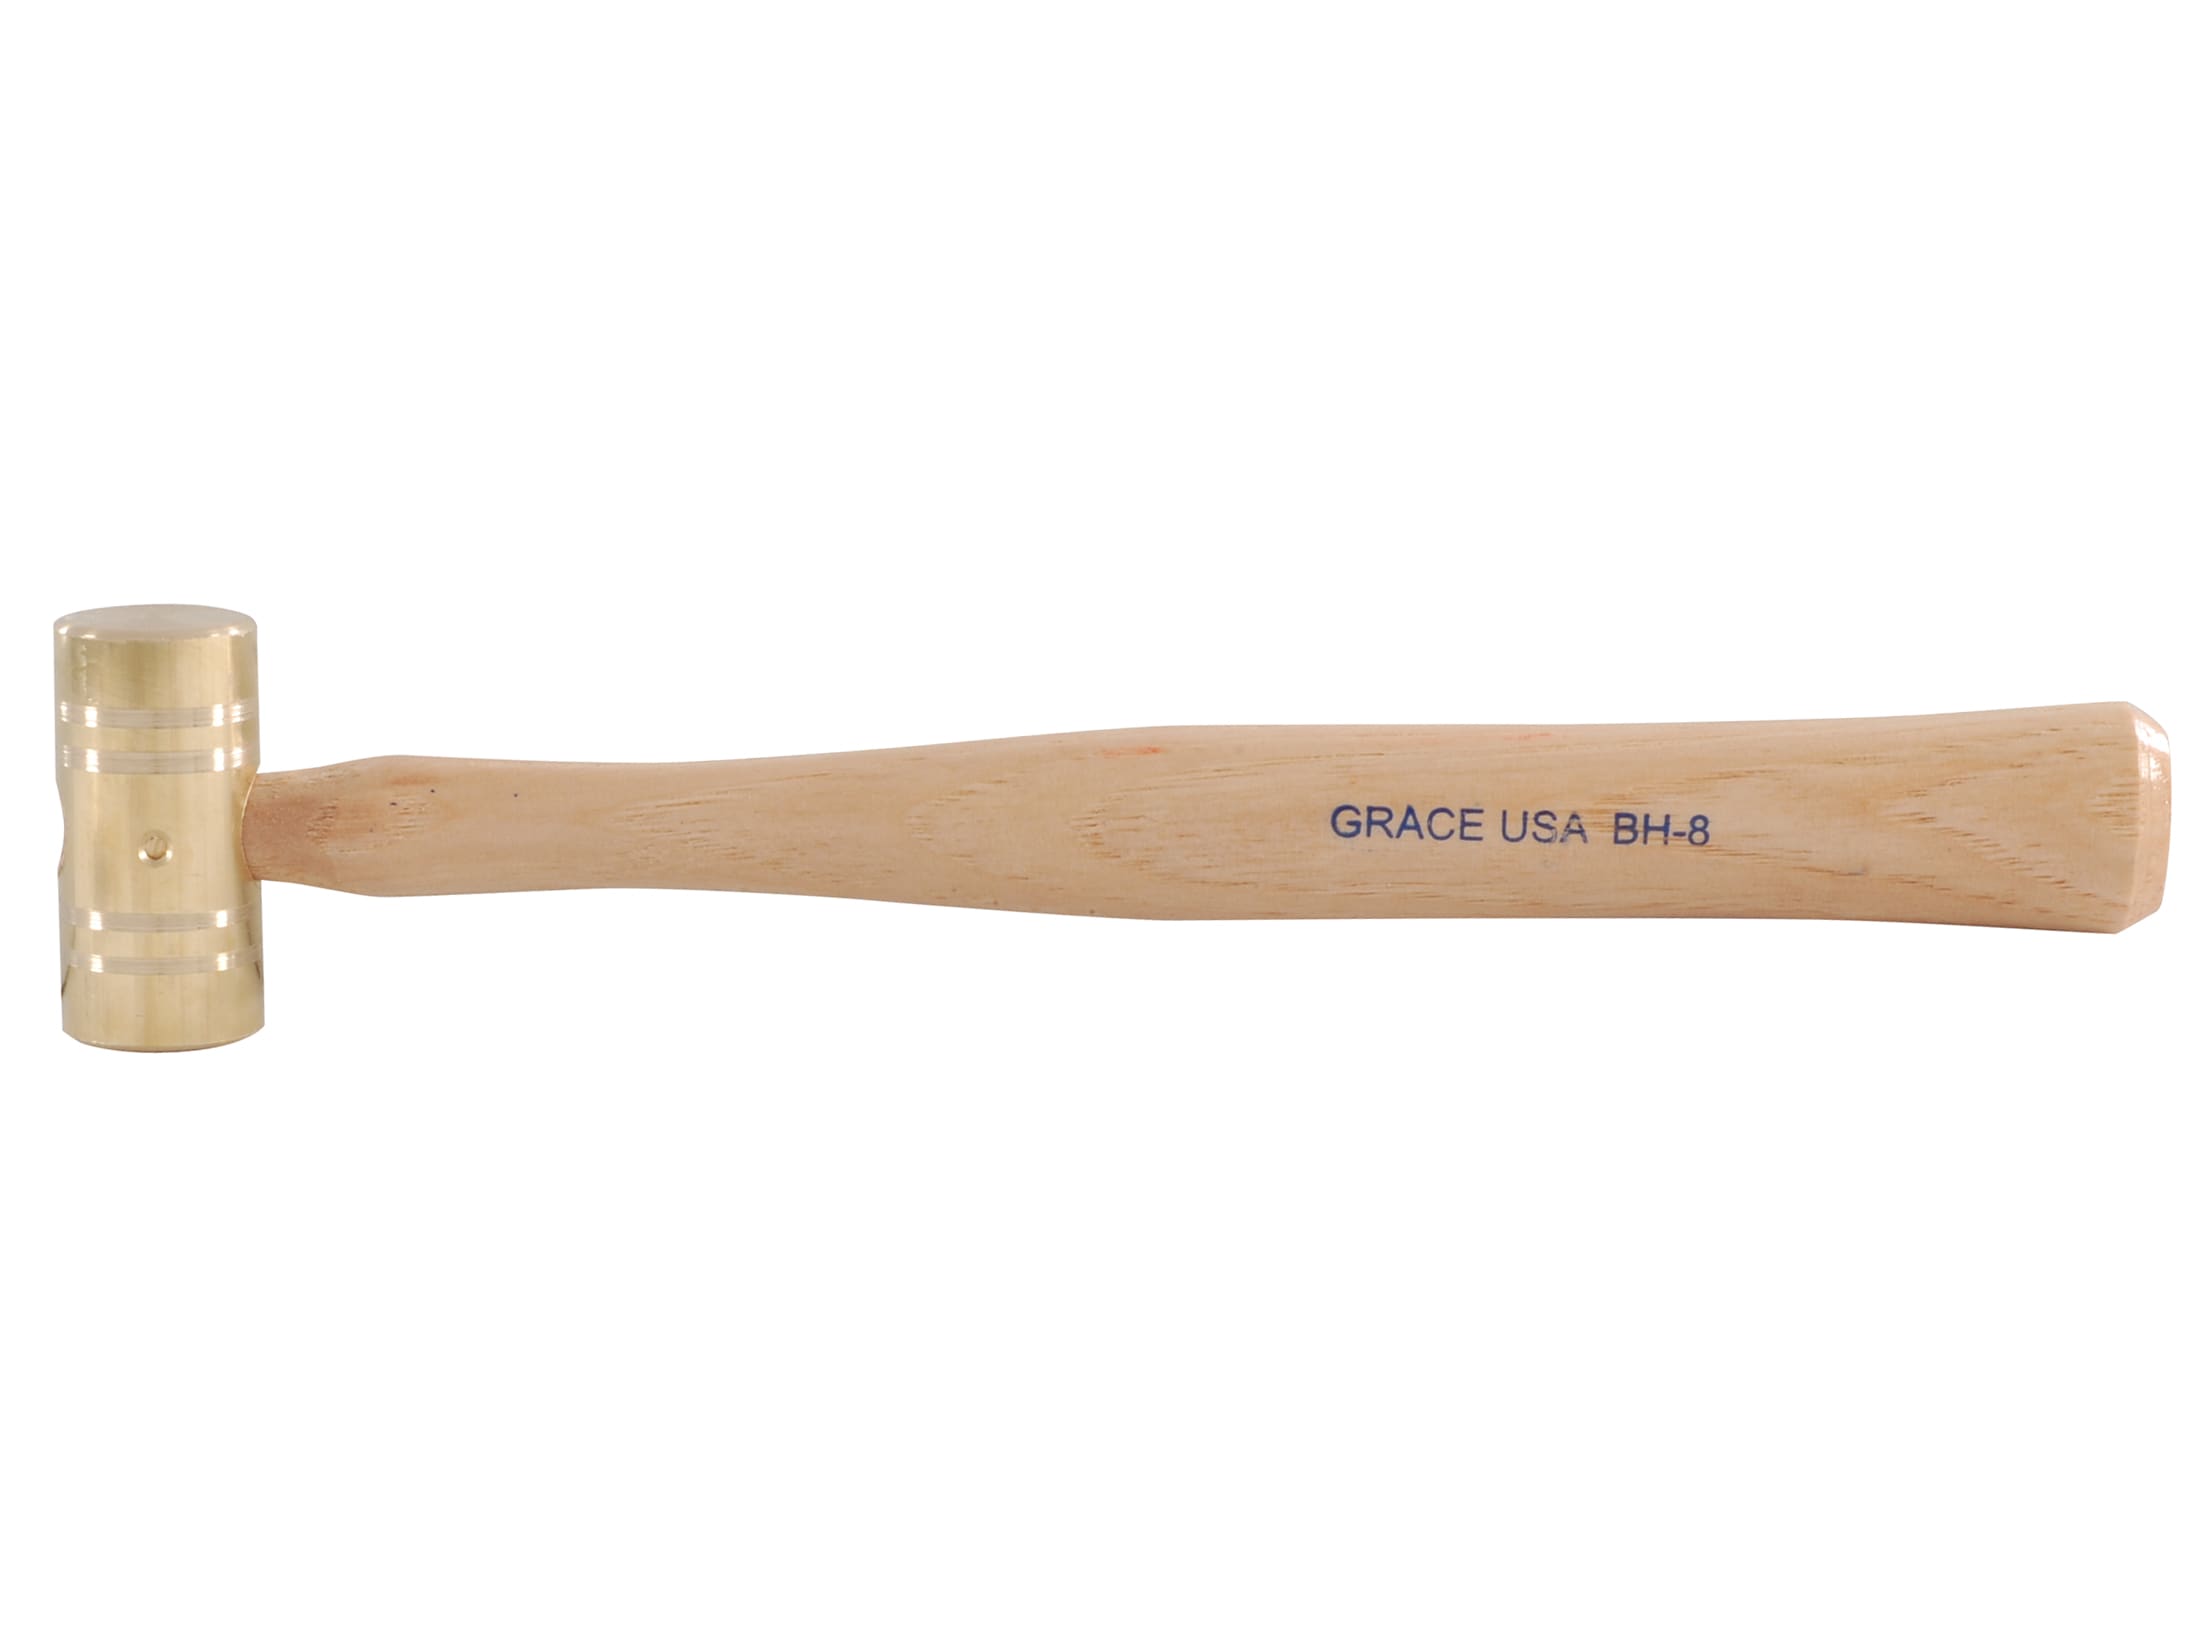 Grace USA 16oz Brass Hammer Made in USA